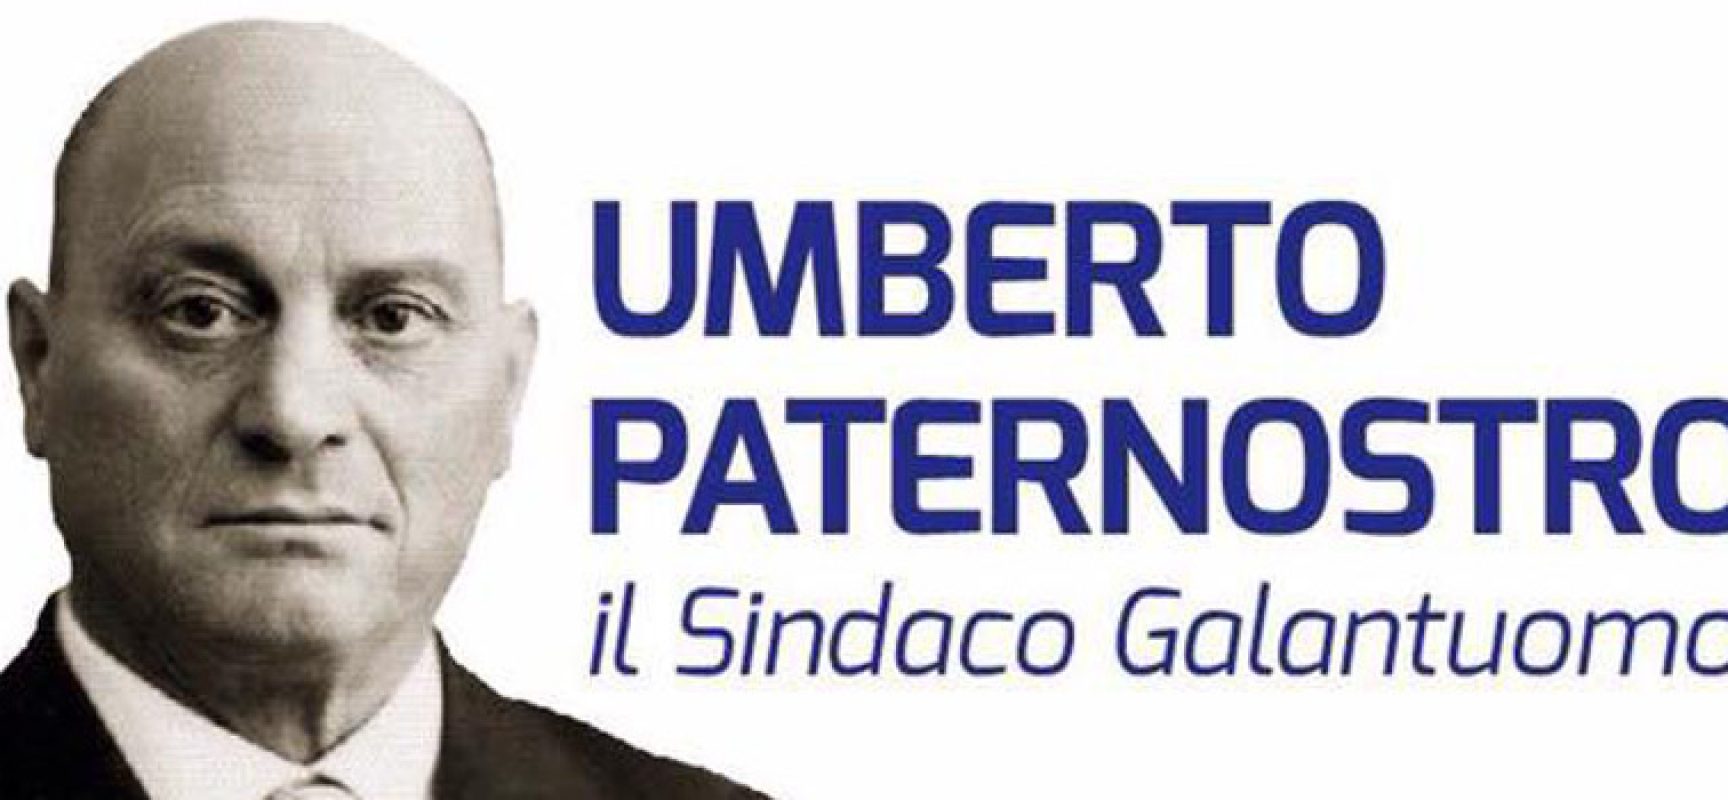 Bisceglie 2018, questa sera a Santa Croce convegno su Umberto Paternostro